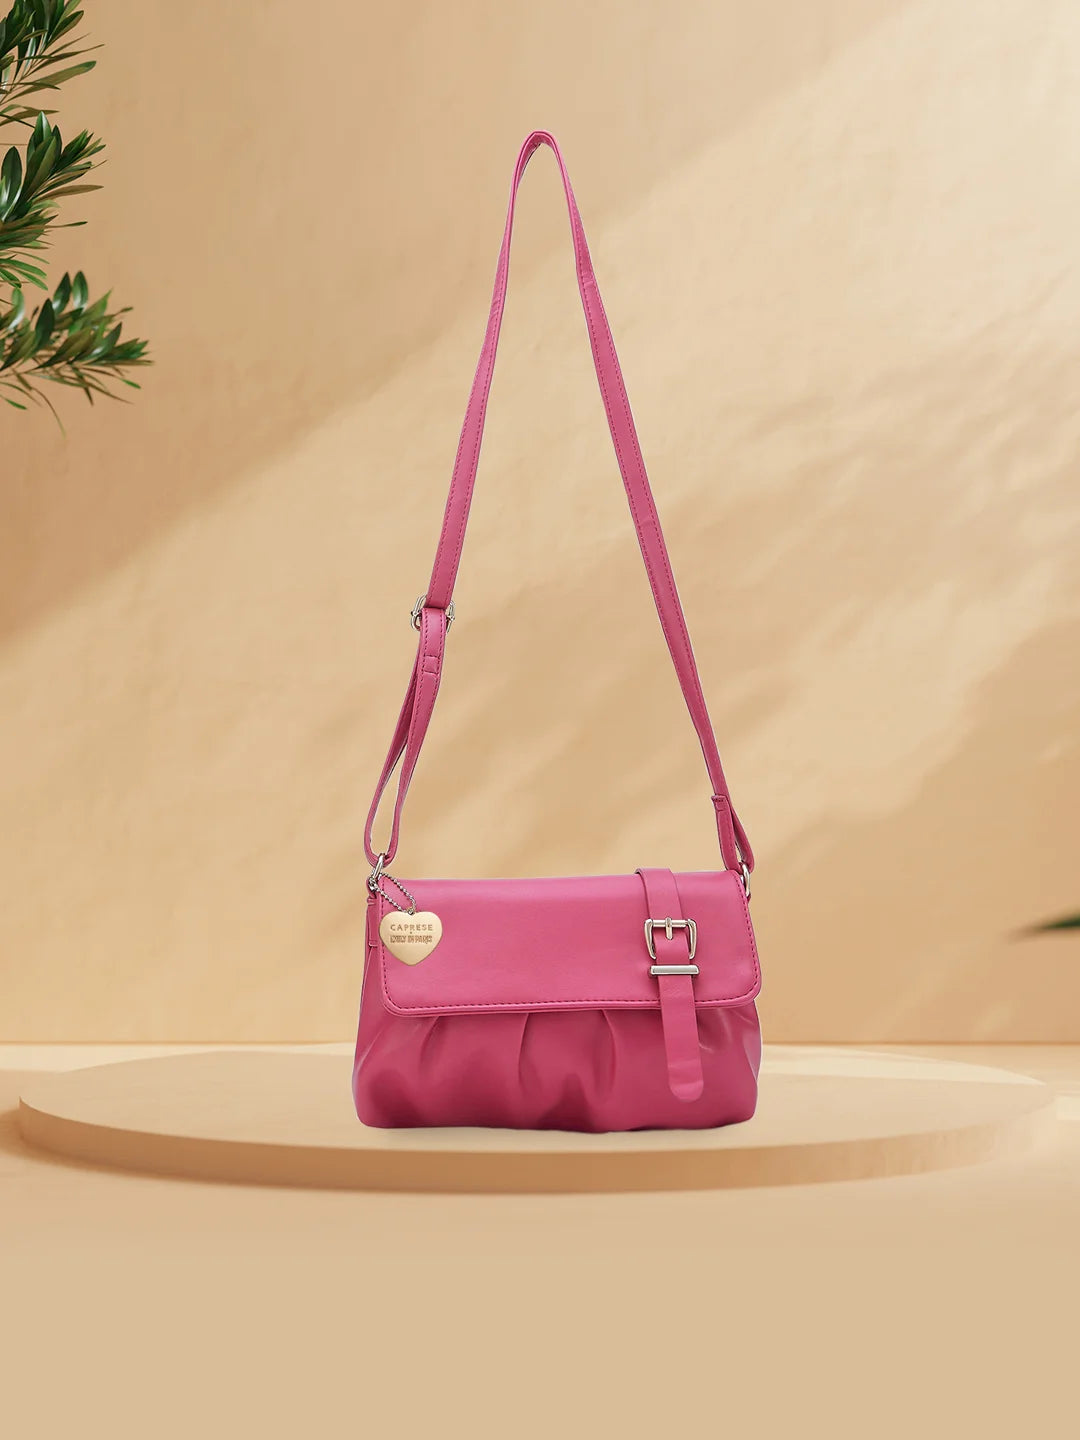 Caprese Emily in Paris Solid Small Sling Handbag